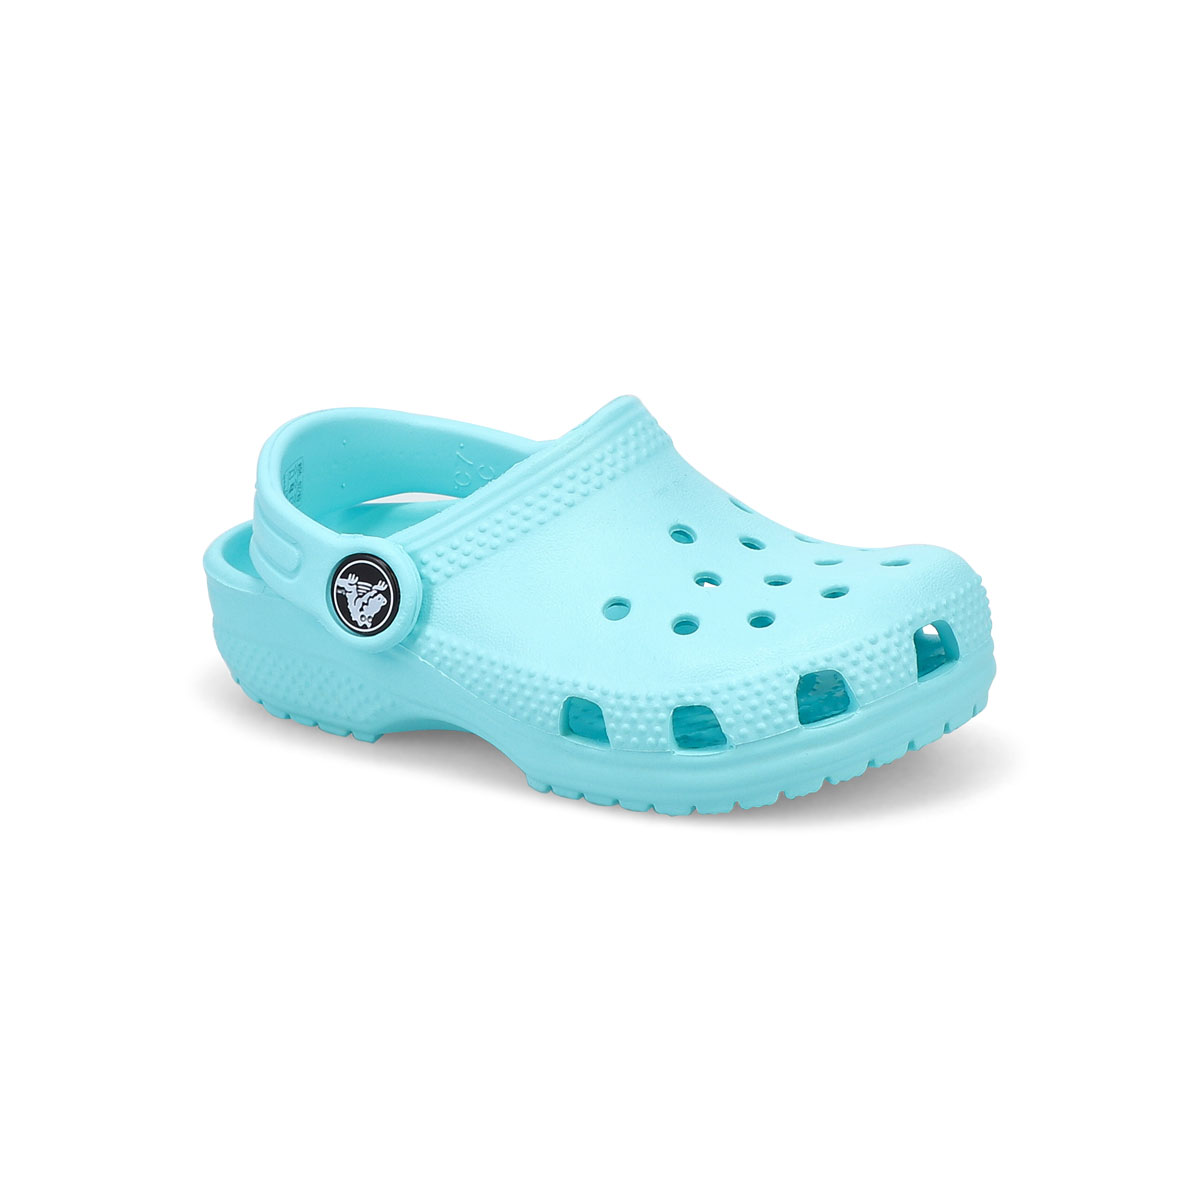 Crocs Infants' Classic EVA Comfort Clog - Bla | SoftMoc.com